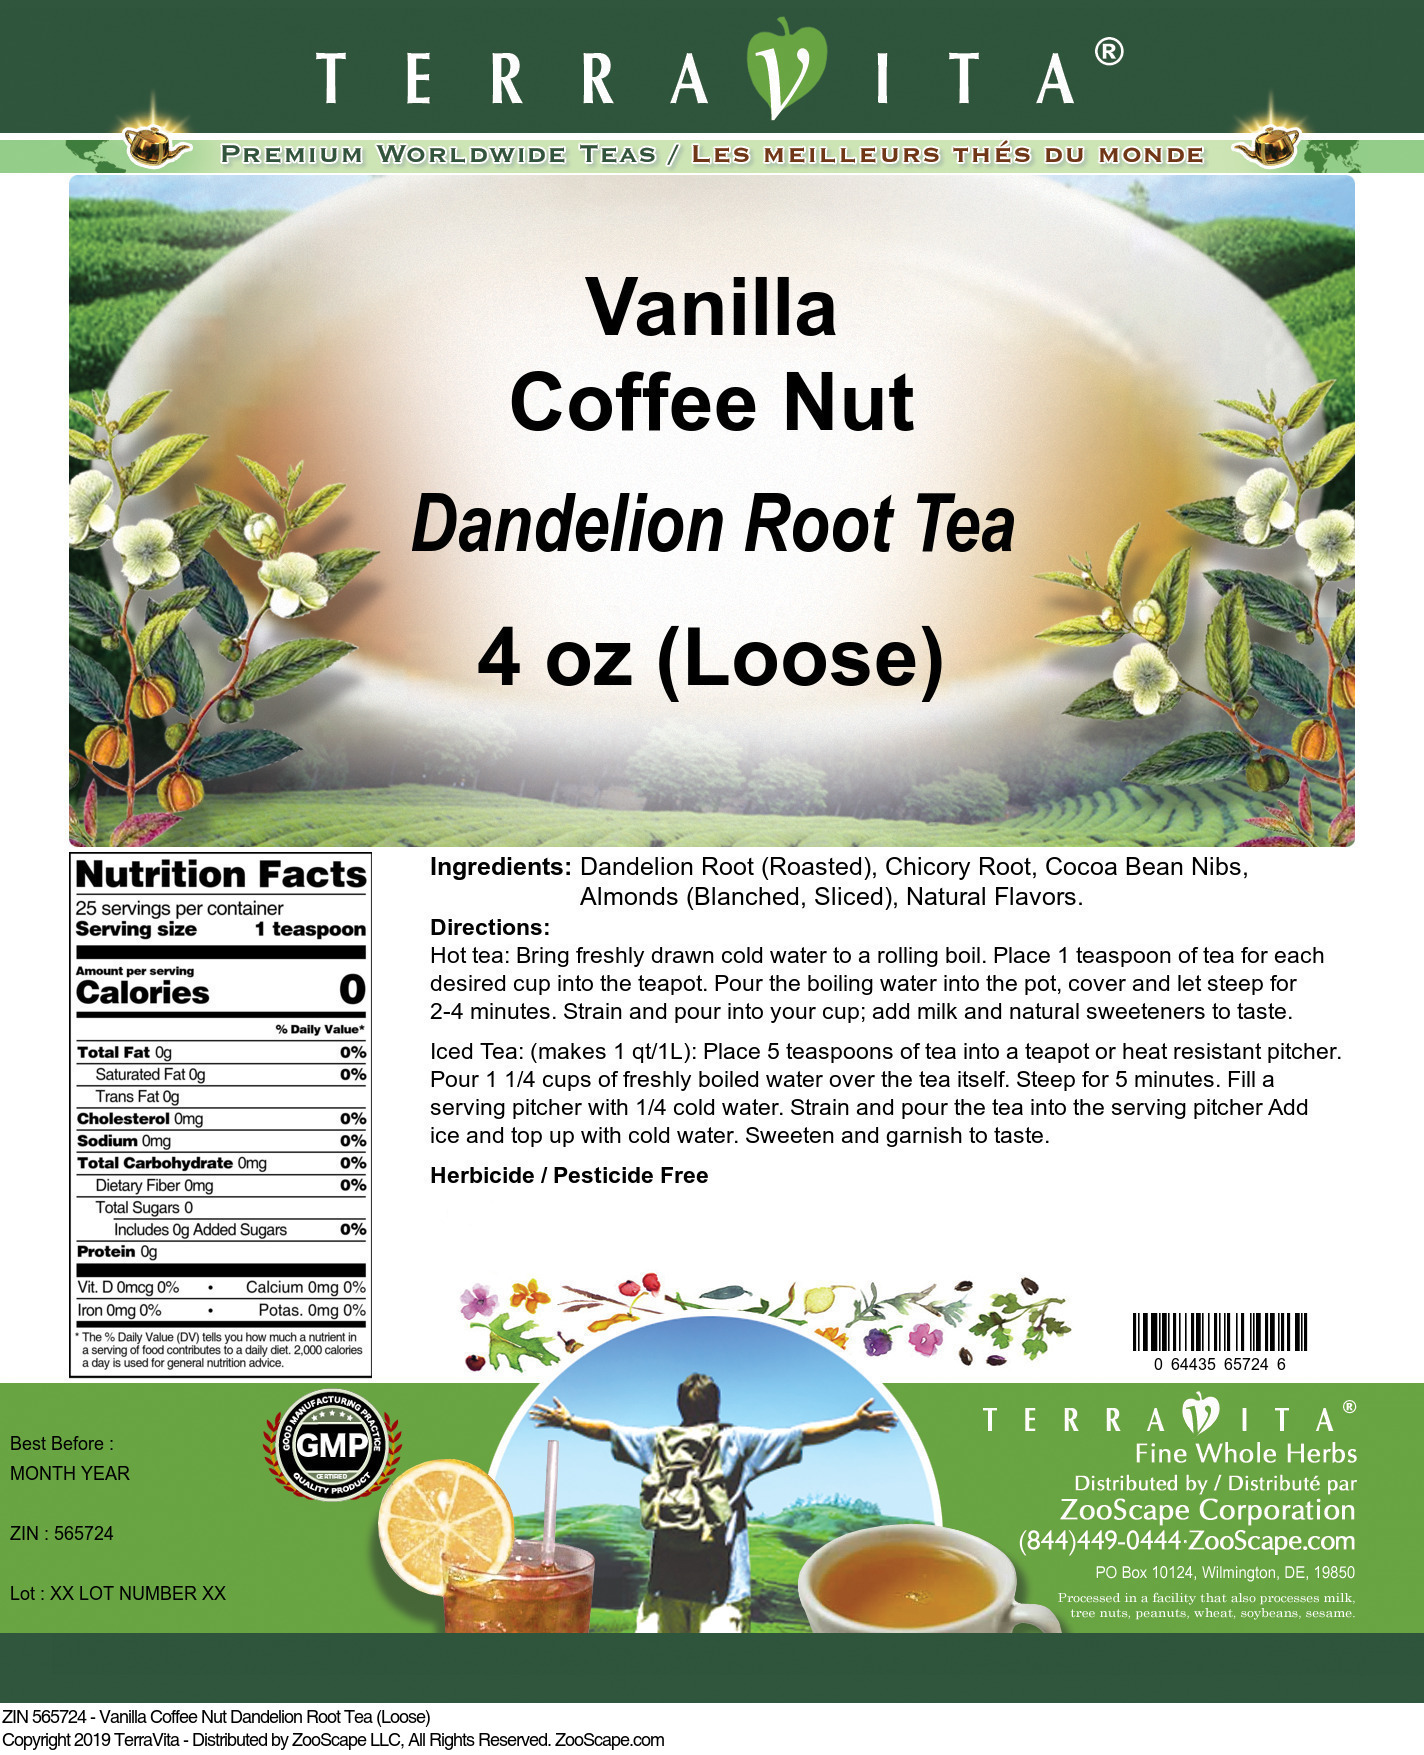 Vanilla Coffee Nut Dandelion Root Tea (Loose) - Label